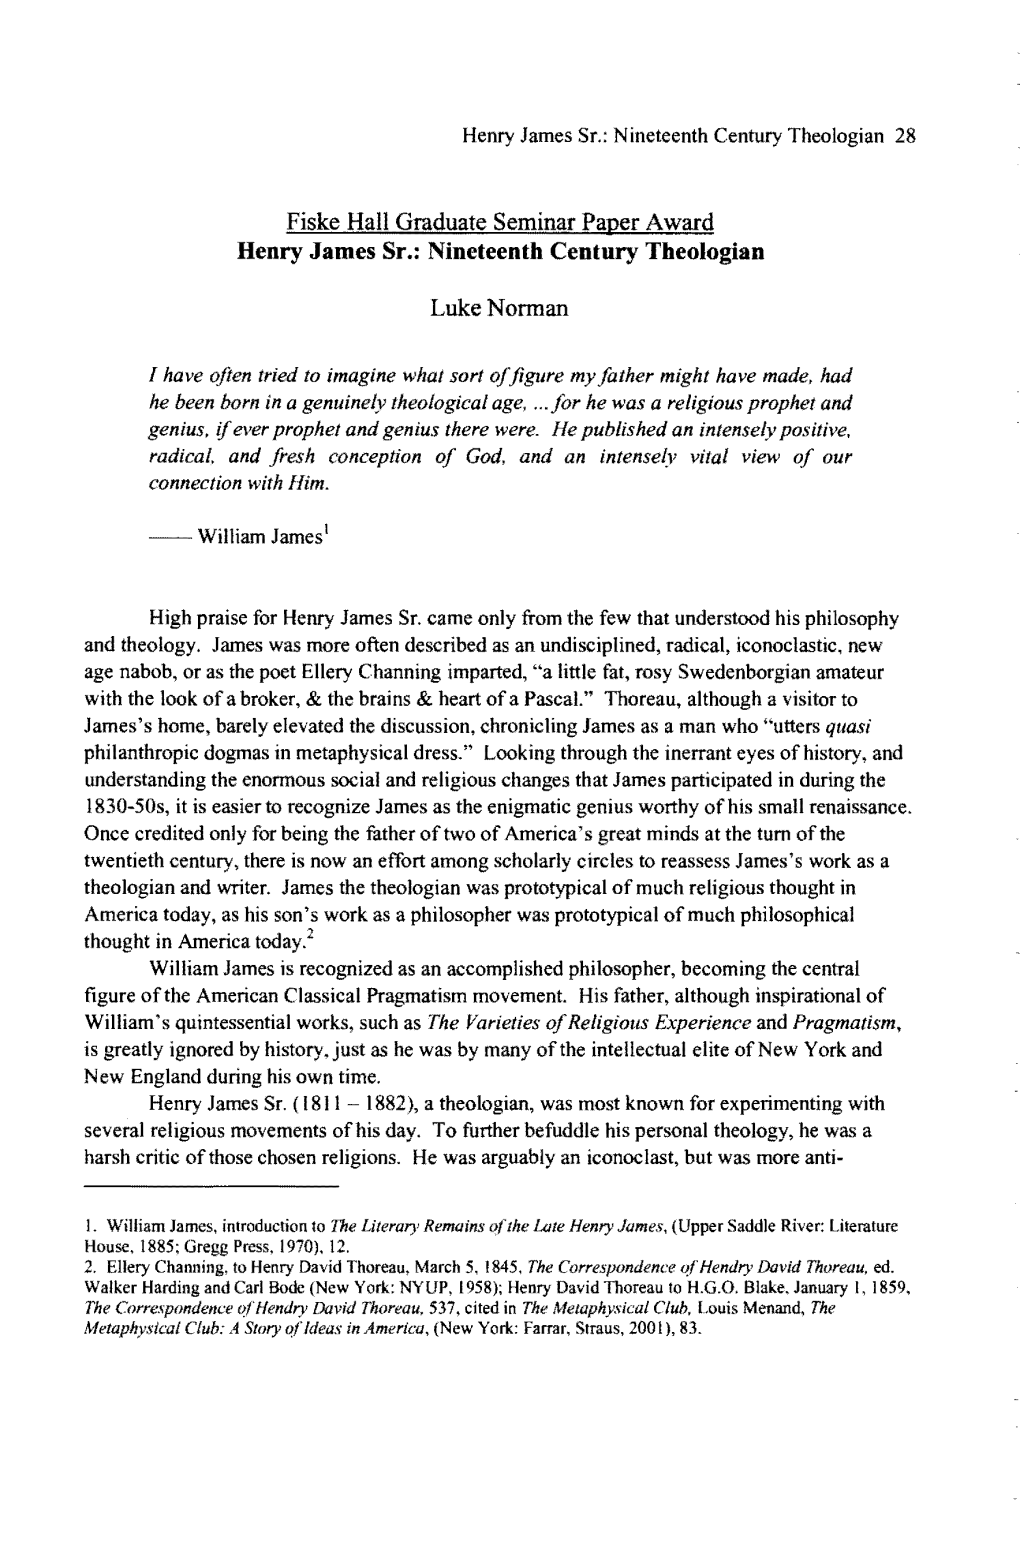 Fiske Hall Graduate Seminar Paper Award Henry James Sr.: Nineteenth Century Theologian